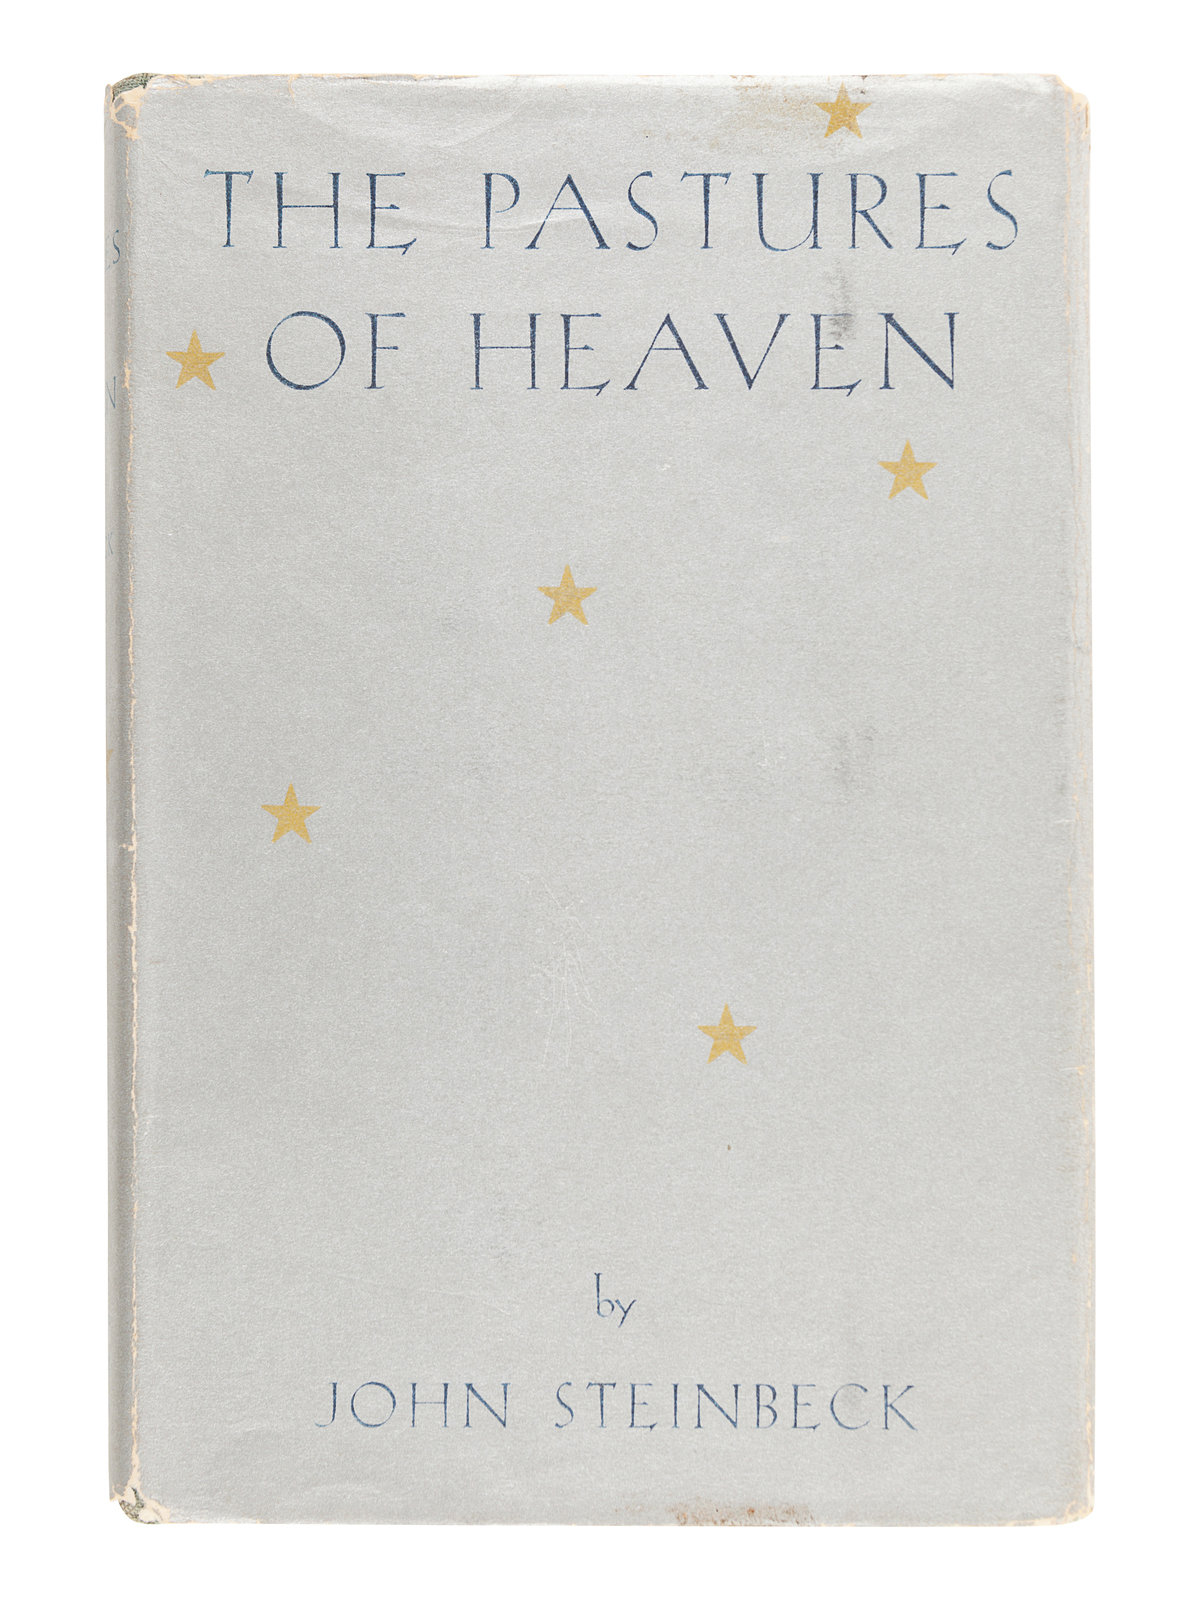 STEINBECK, John (1902-1968). The Pastures of Heaven. New York: Brewer, Warren & Putnam, 1932. Image courtesy Hindman Auctions.